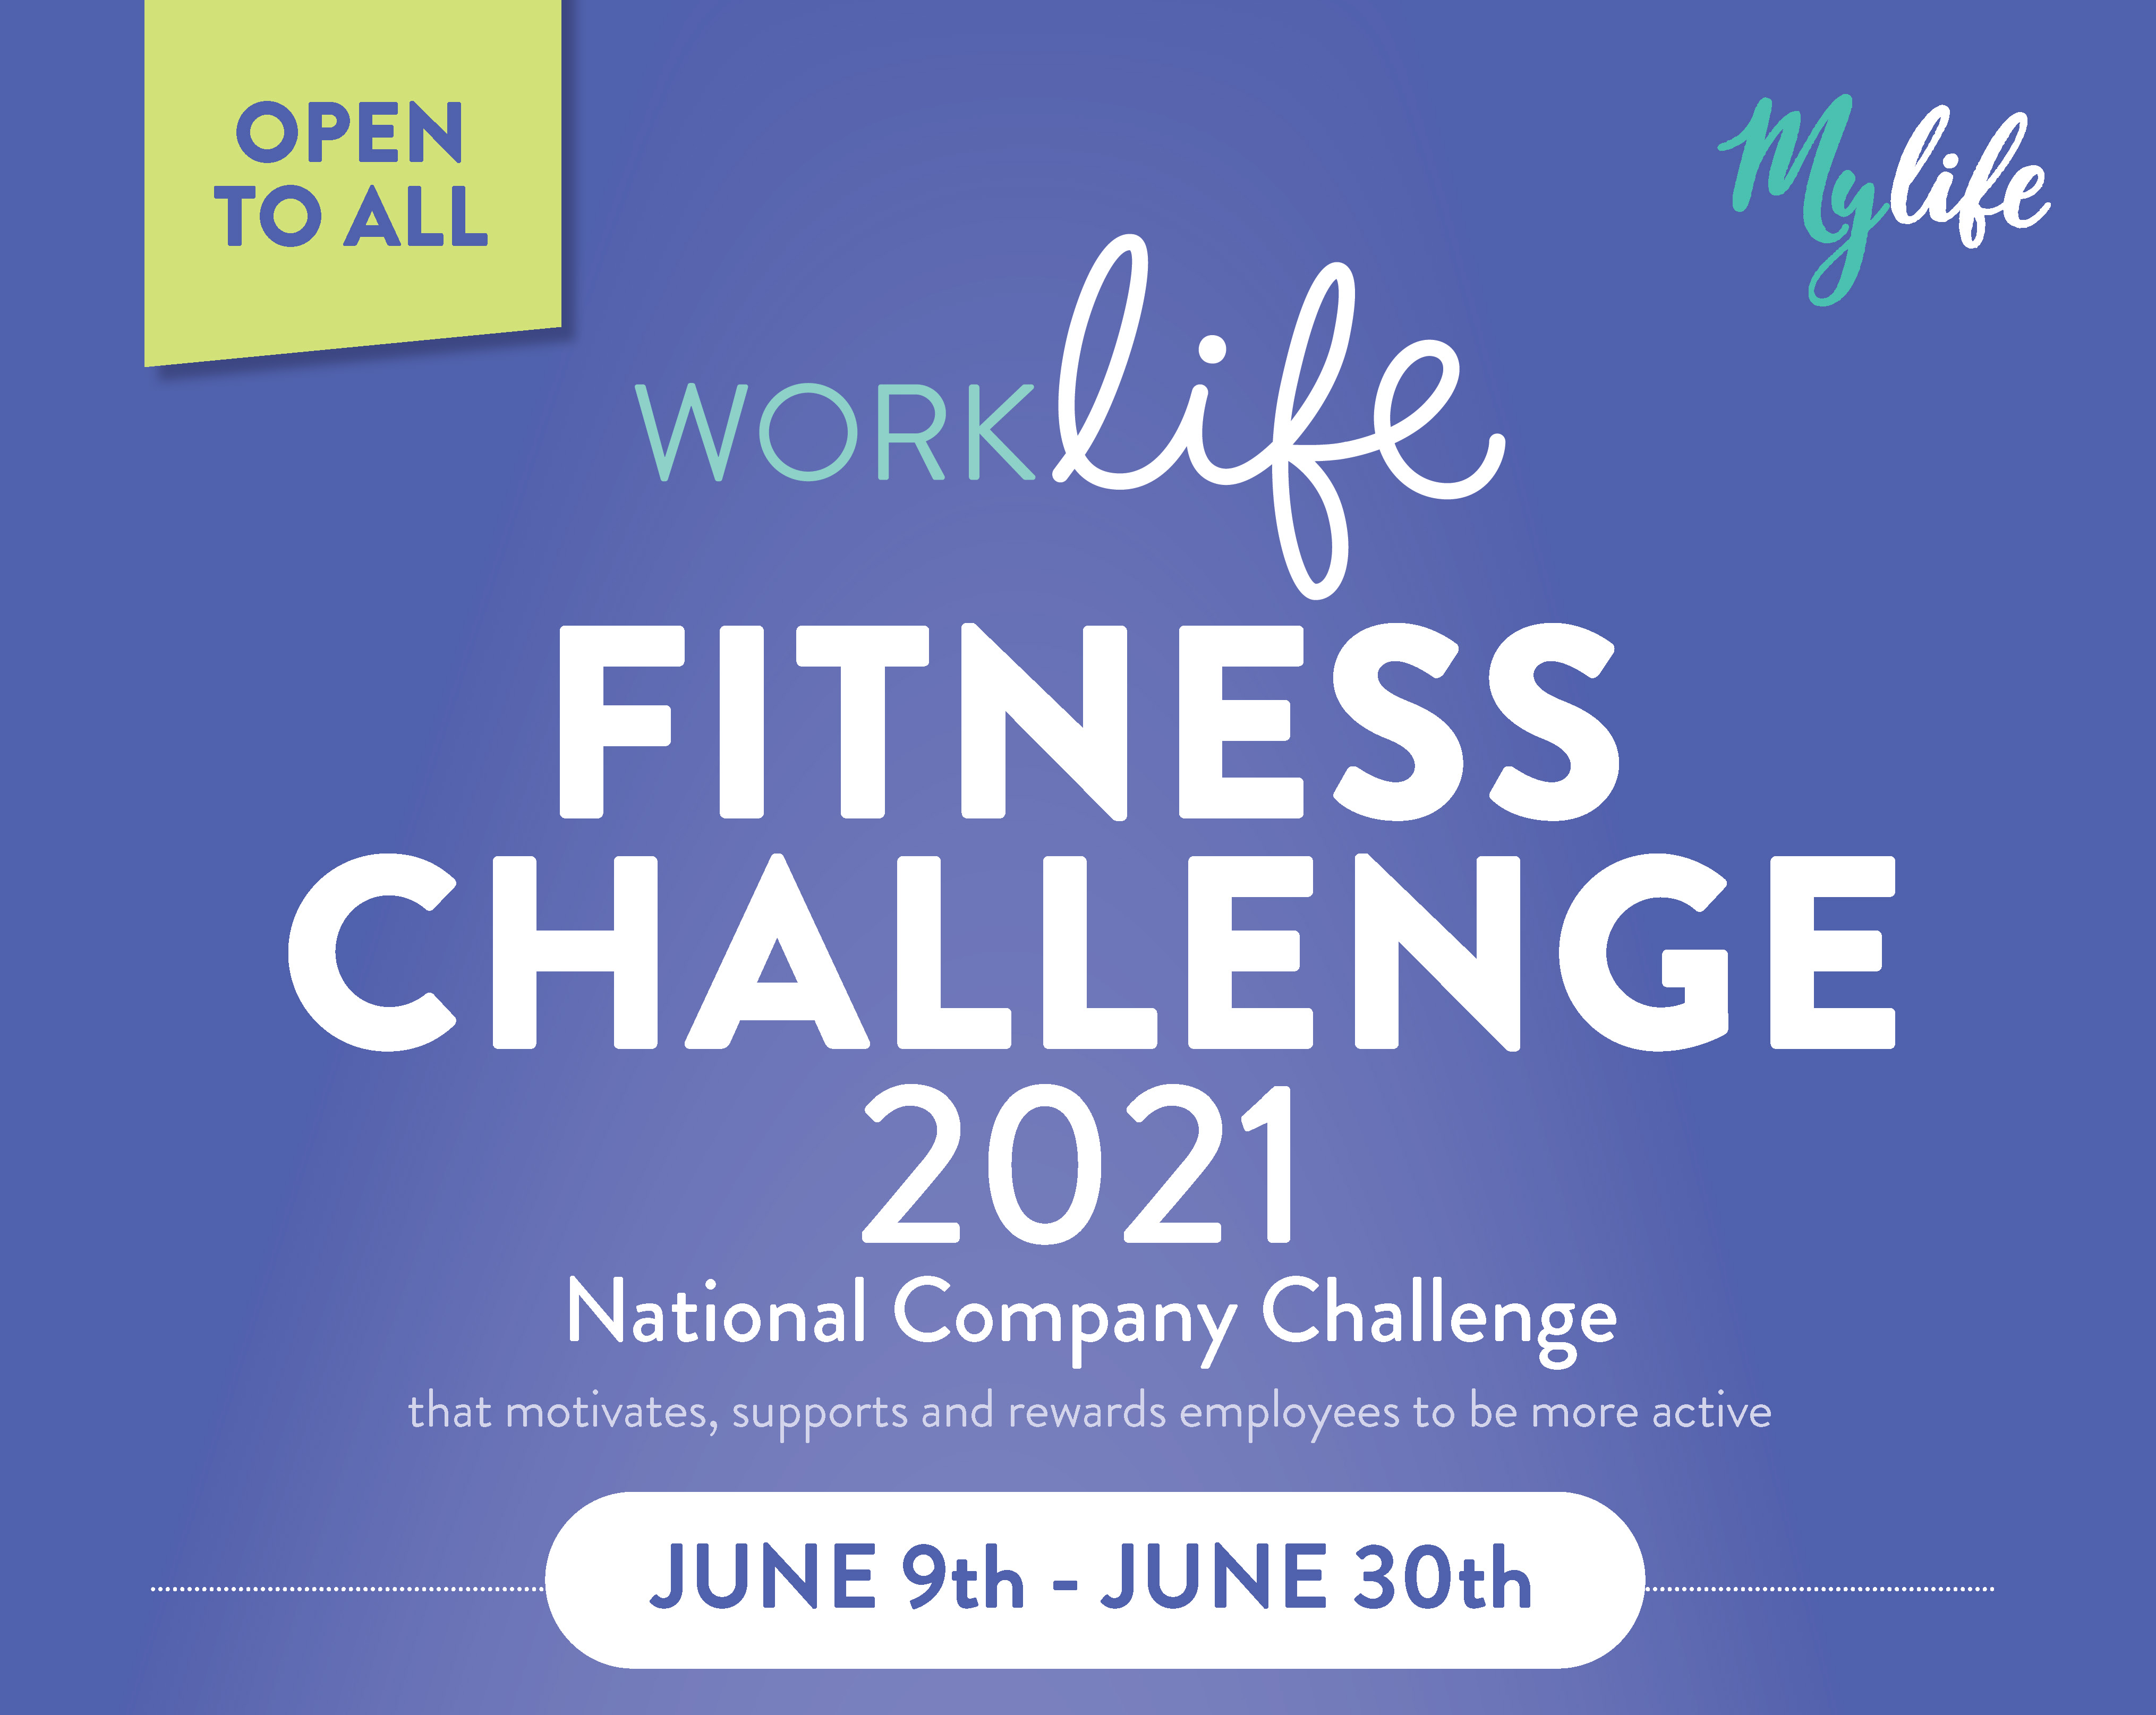 WorkLife Fitness Challenge 2021